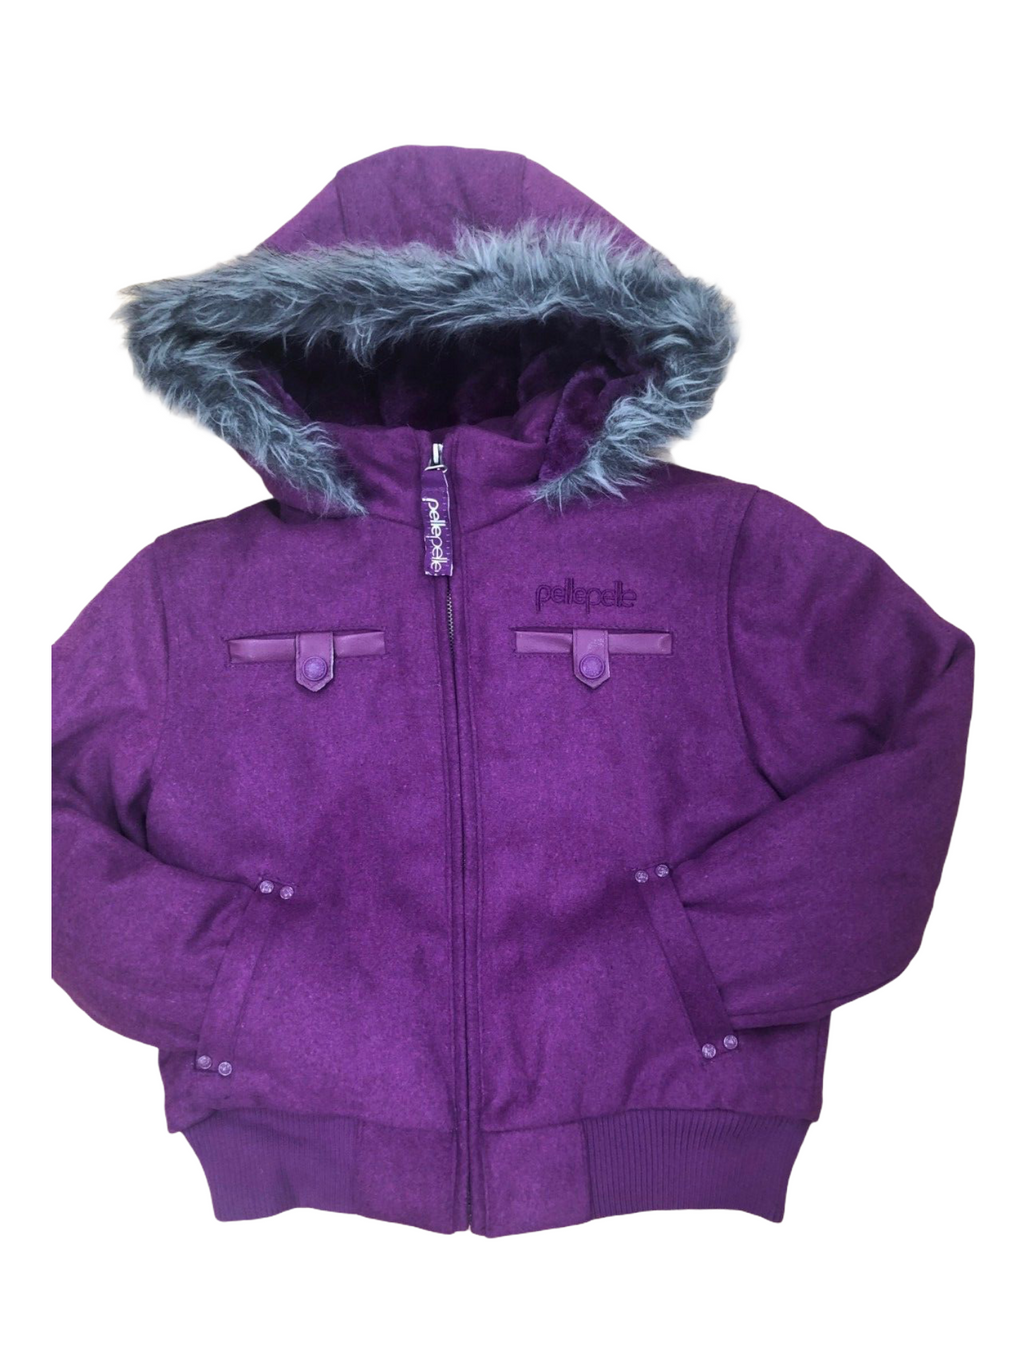 Kids Pelle Pelle Wool Hooded Bomber Jacket - purple